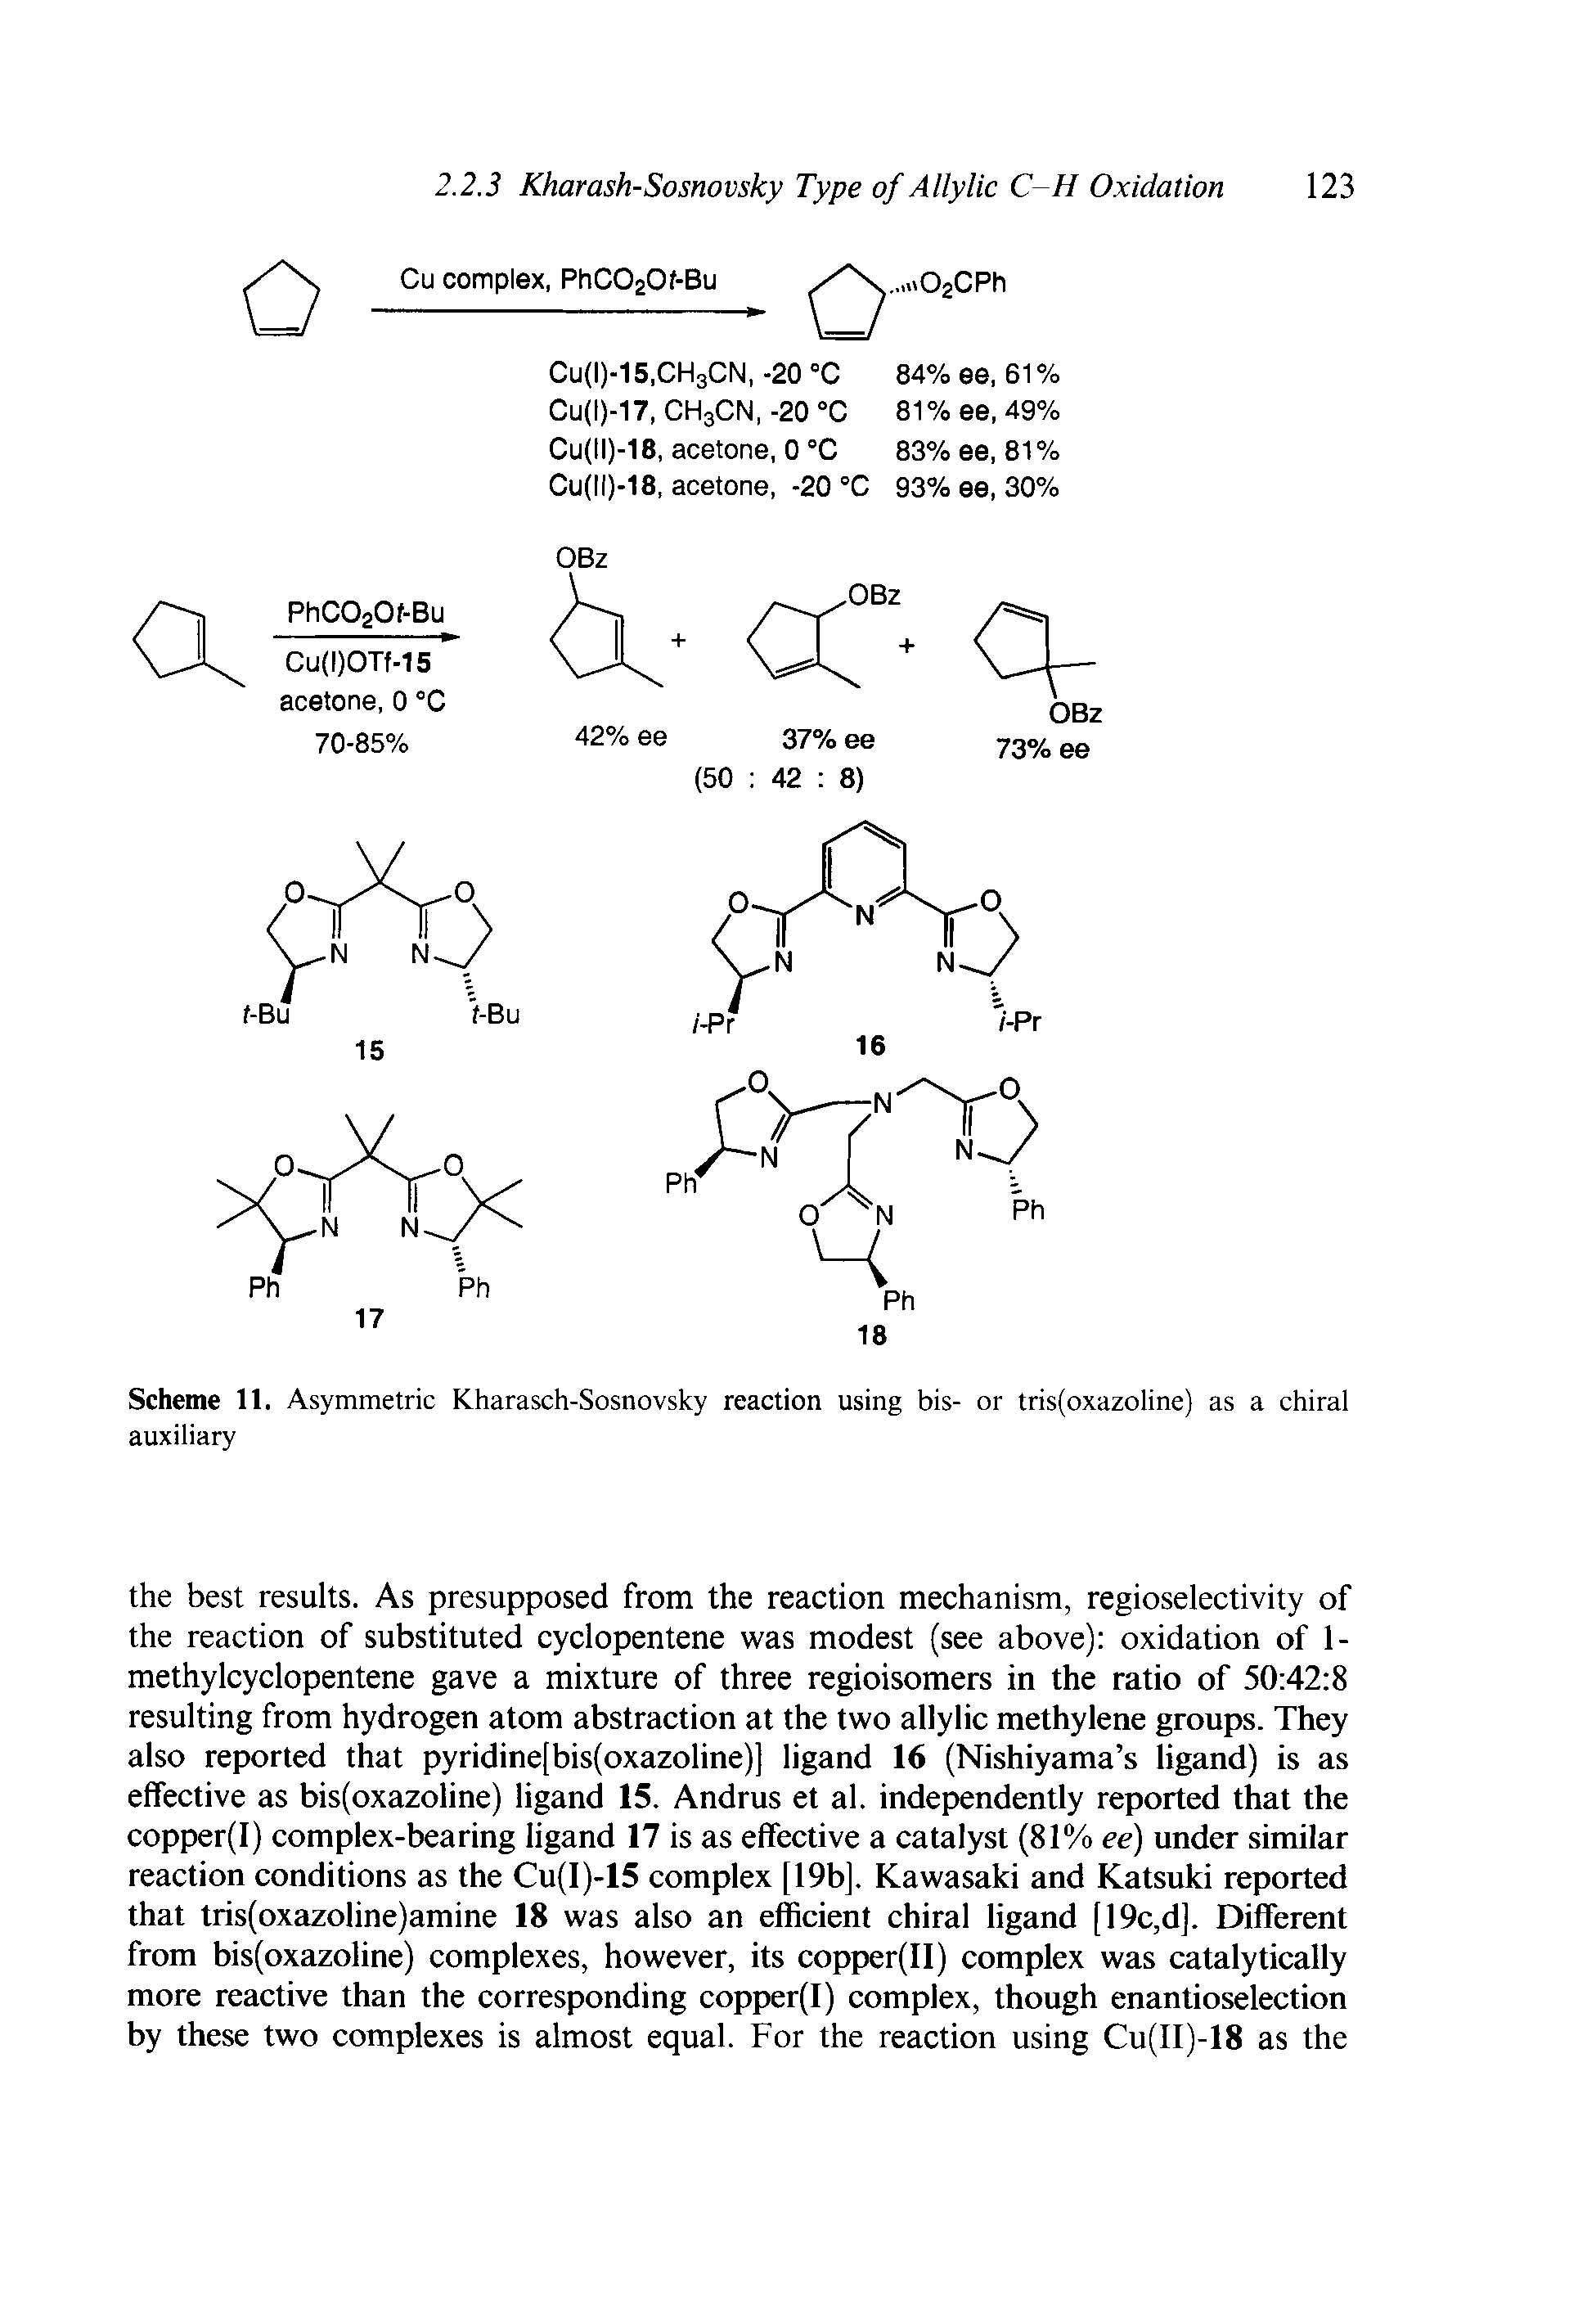 Scheme 11. Asymmetric Kharasch-Sosnovsky reaction using bis- or tris(oxazoline) as a chiral auxiliary...